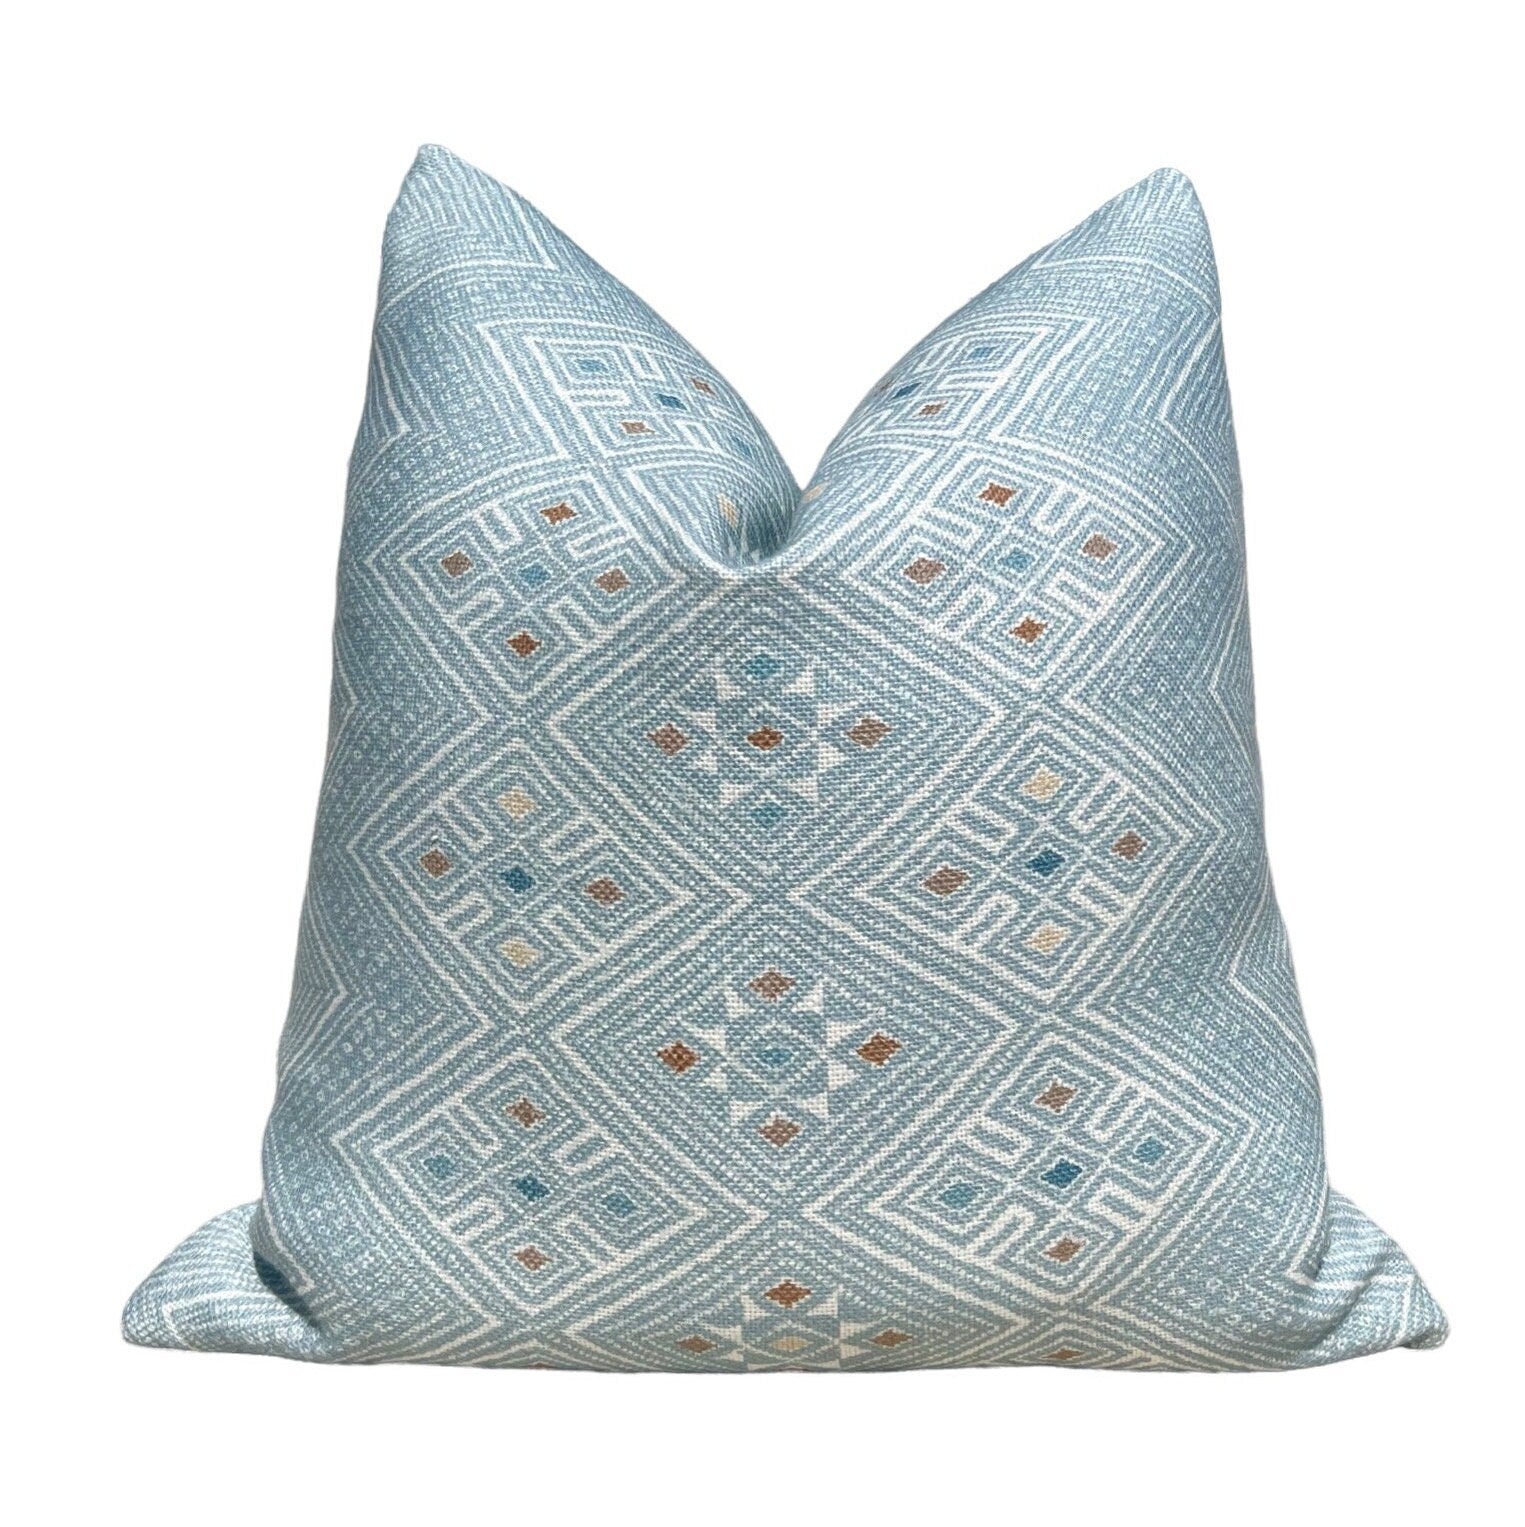 Thibaut High Plains Pillow in Spa Blue. Designer Pillows, High End Pillows, Aqua Blue Pillow Cover, Zig Zag Light Blue Accent Pillows